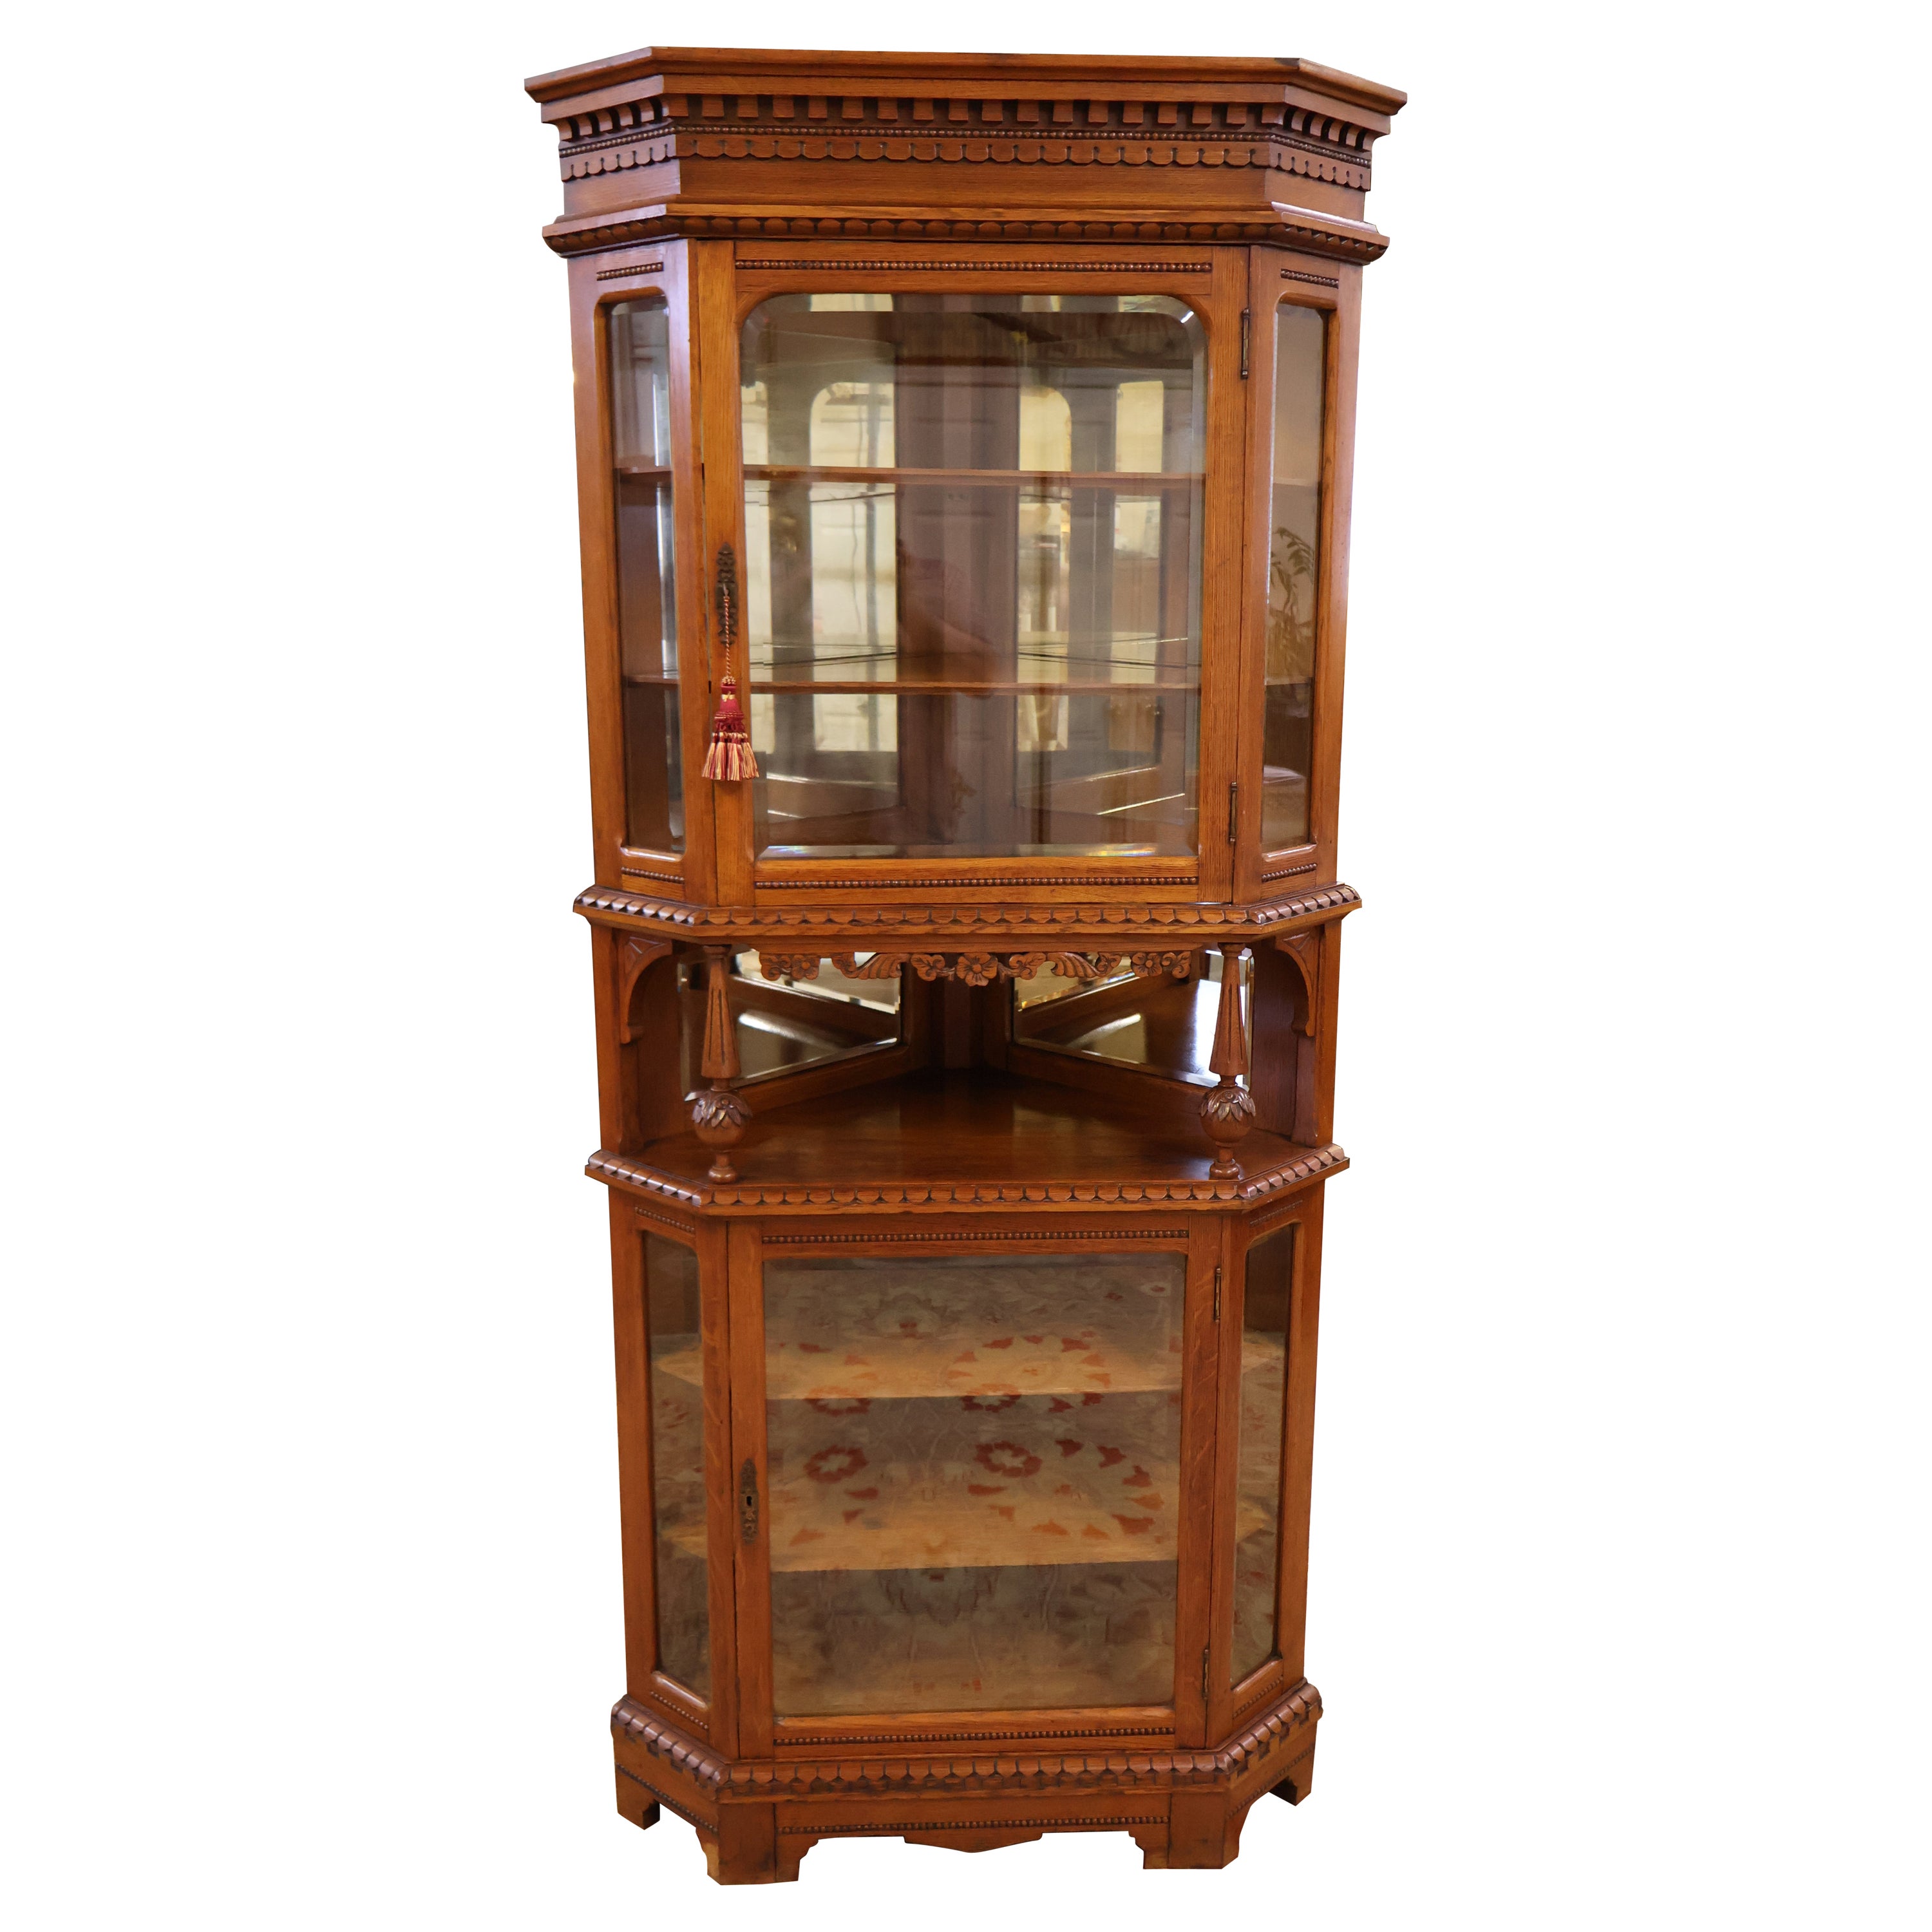 19th Century Oak Victorian Corner Cupboard Corner Cabinet Circa 1880's